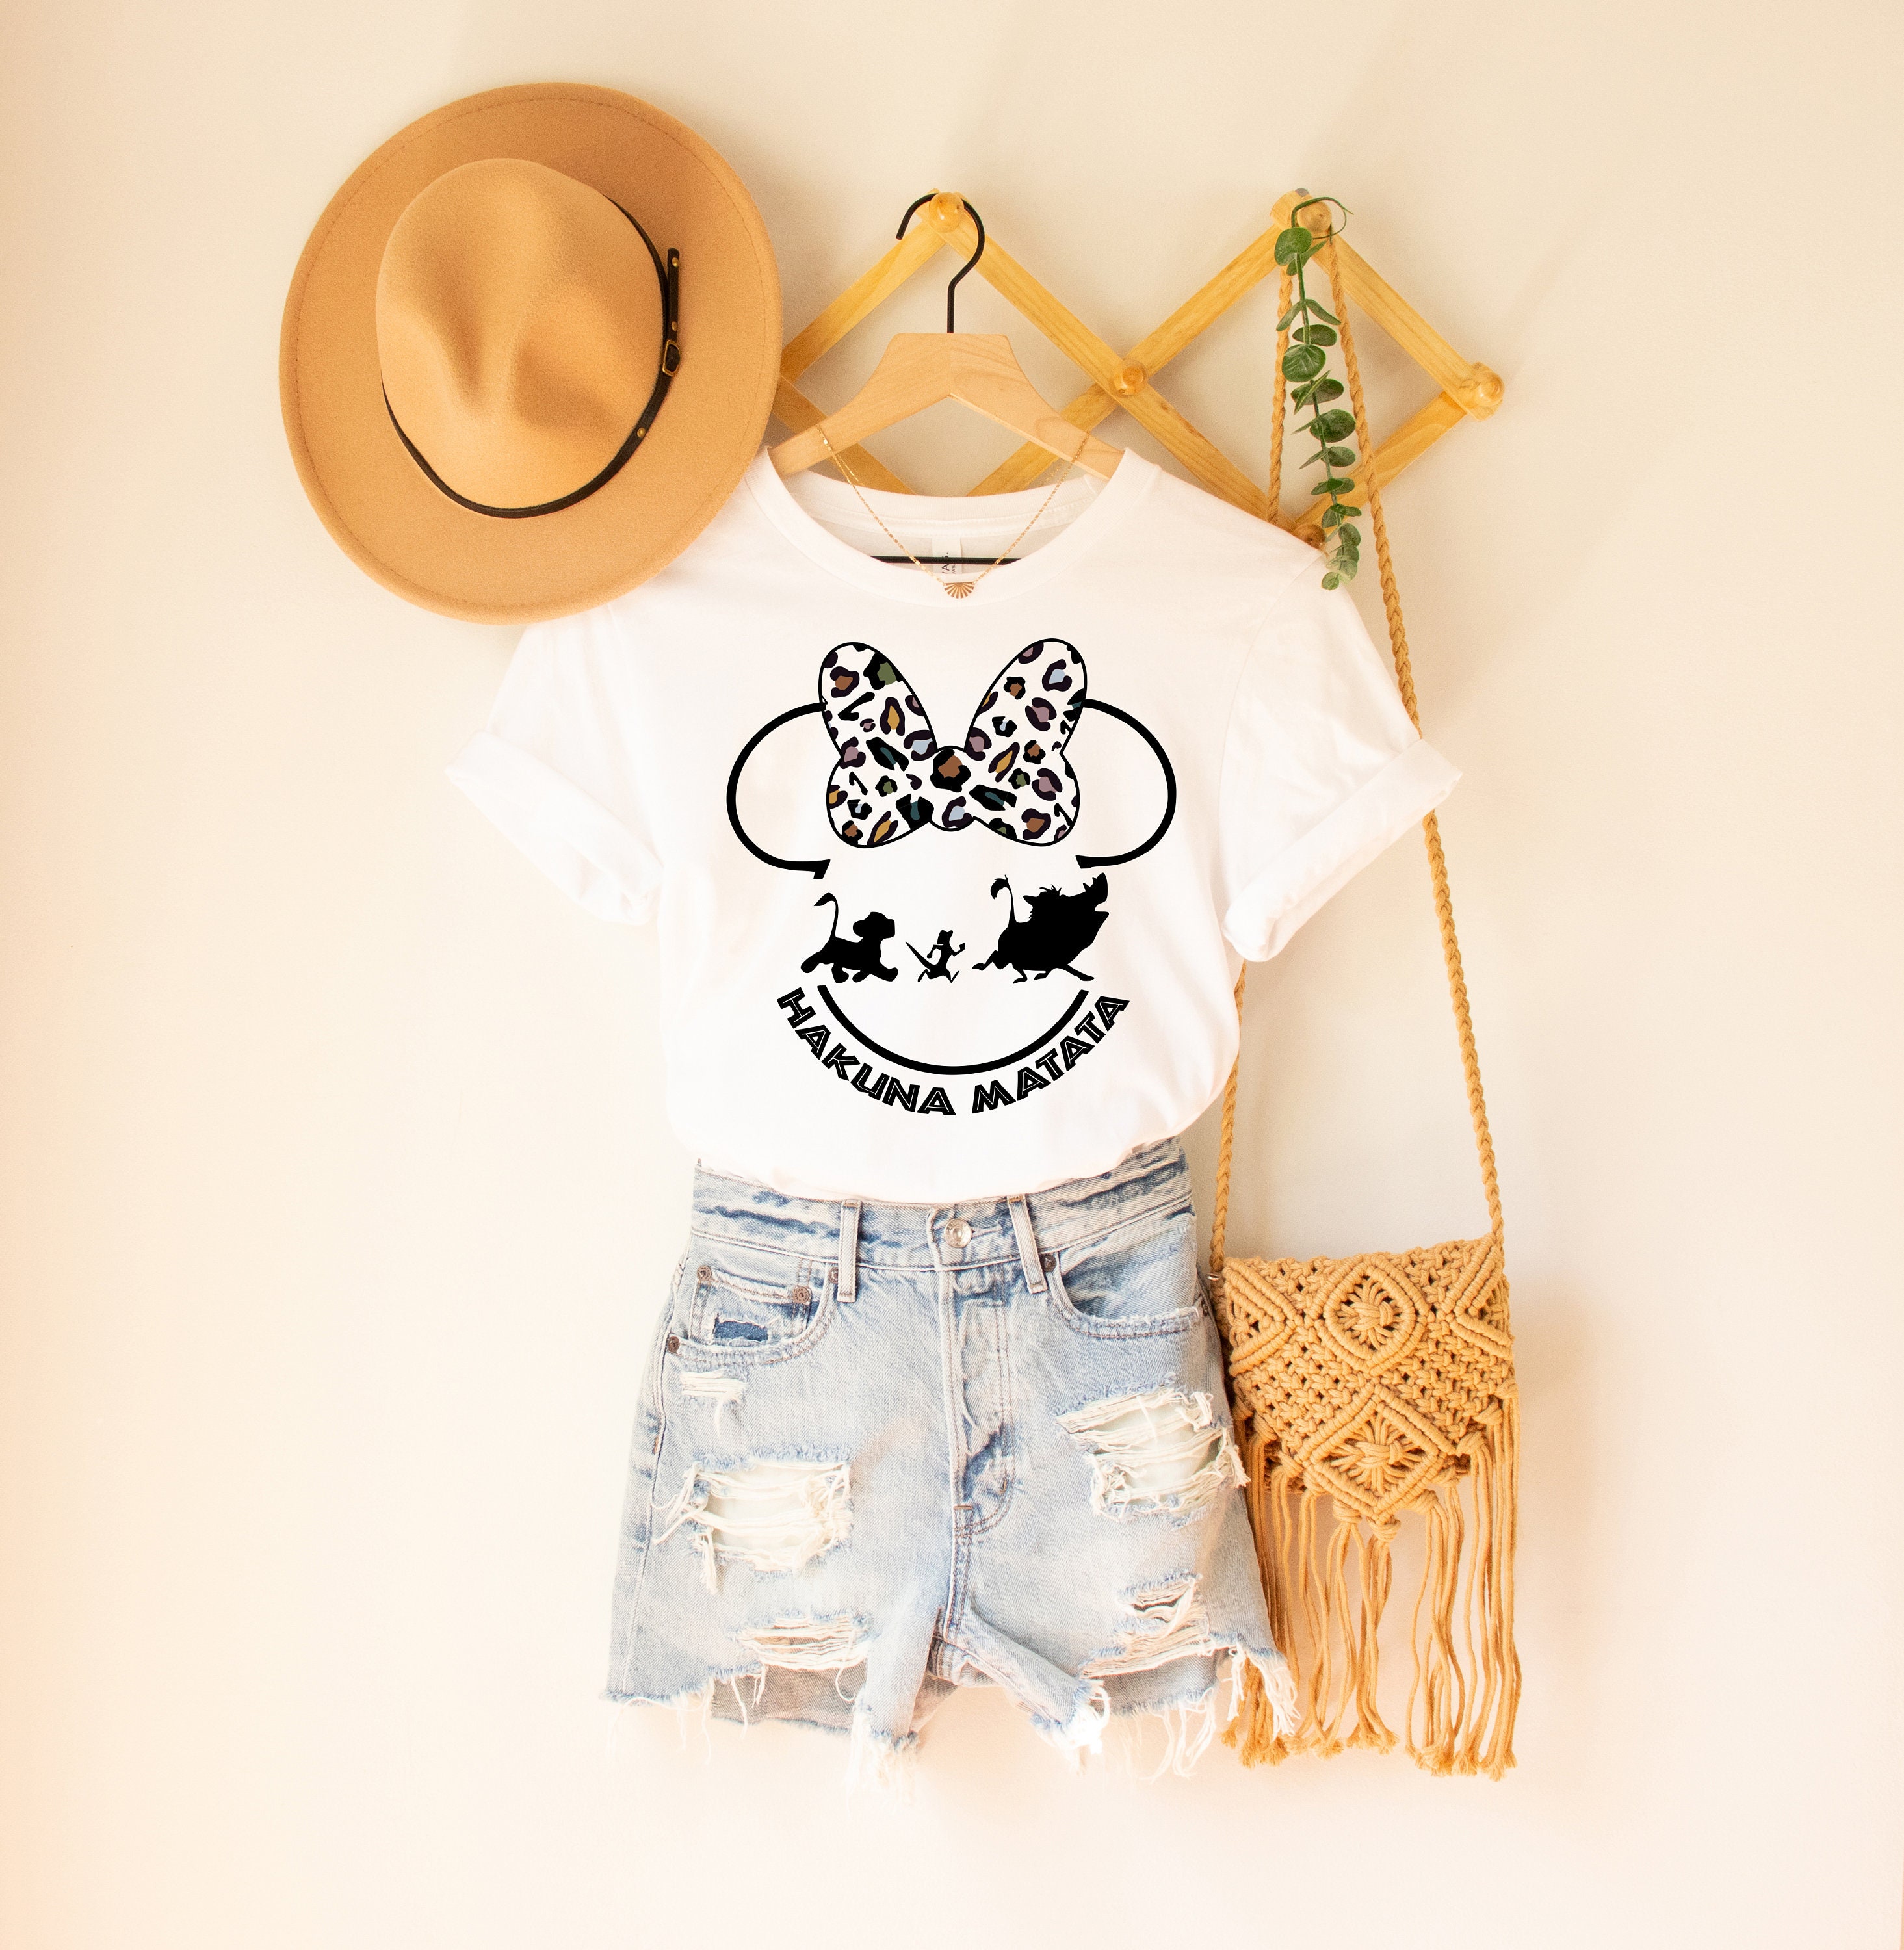 Discover Disney shirt - Disney Vacation shirt - Disney Animal Kingdom shirt